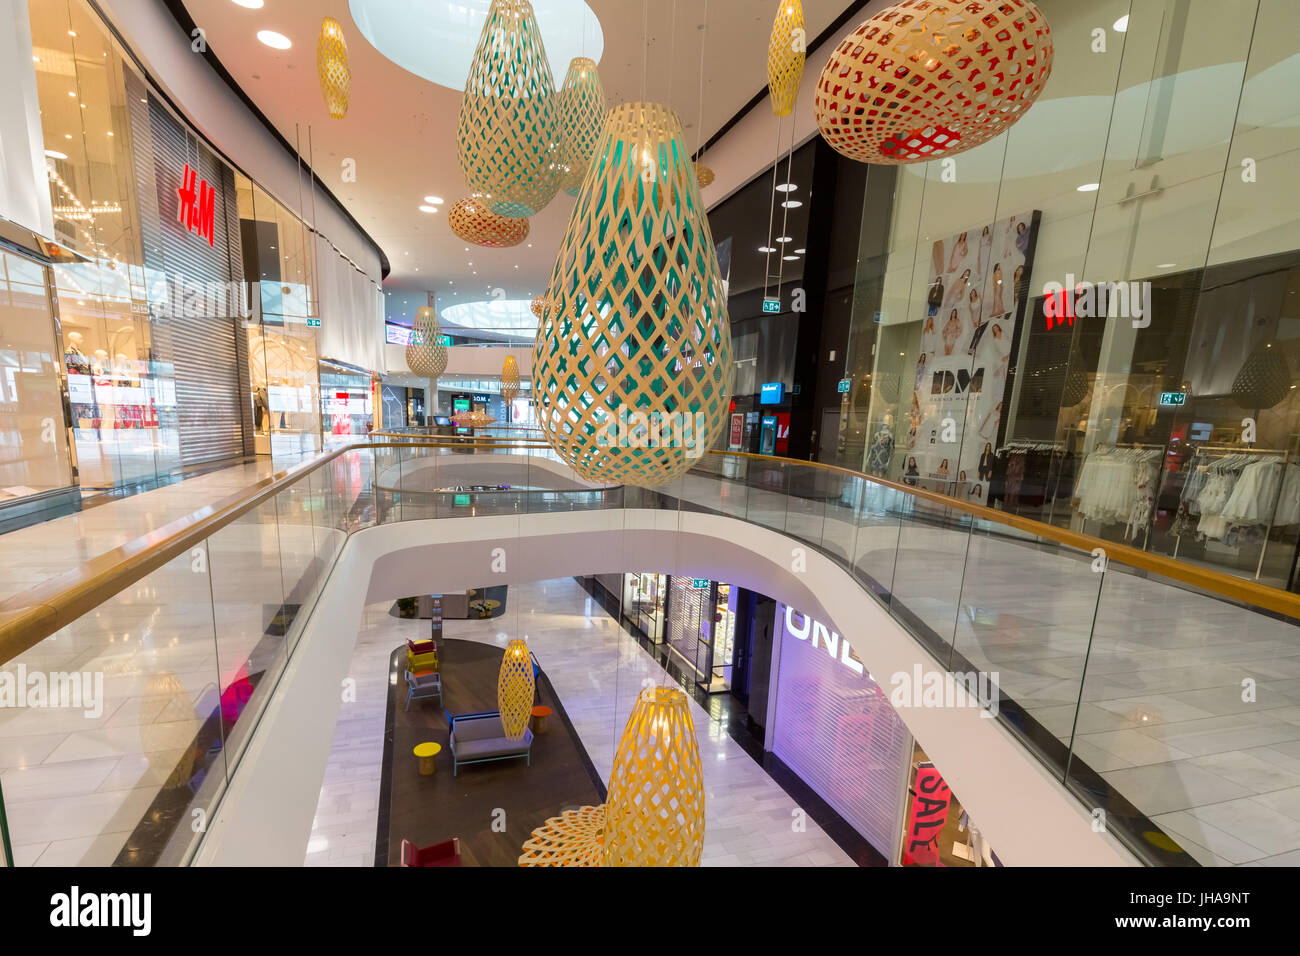 Inside Mall Of Scandinavia Solna Sweden Stock Photo 148359284